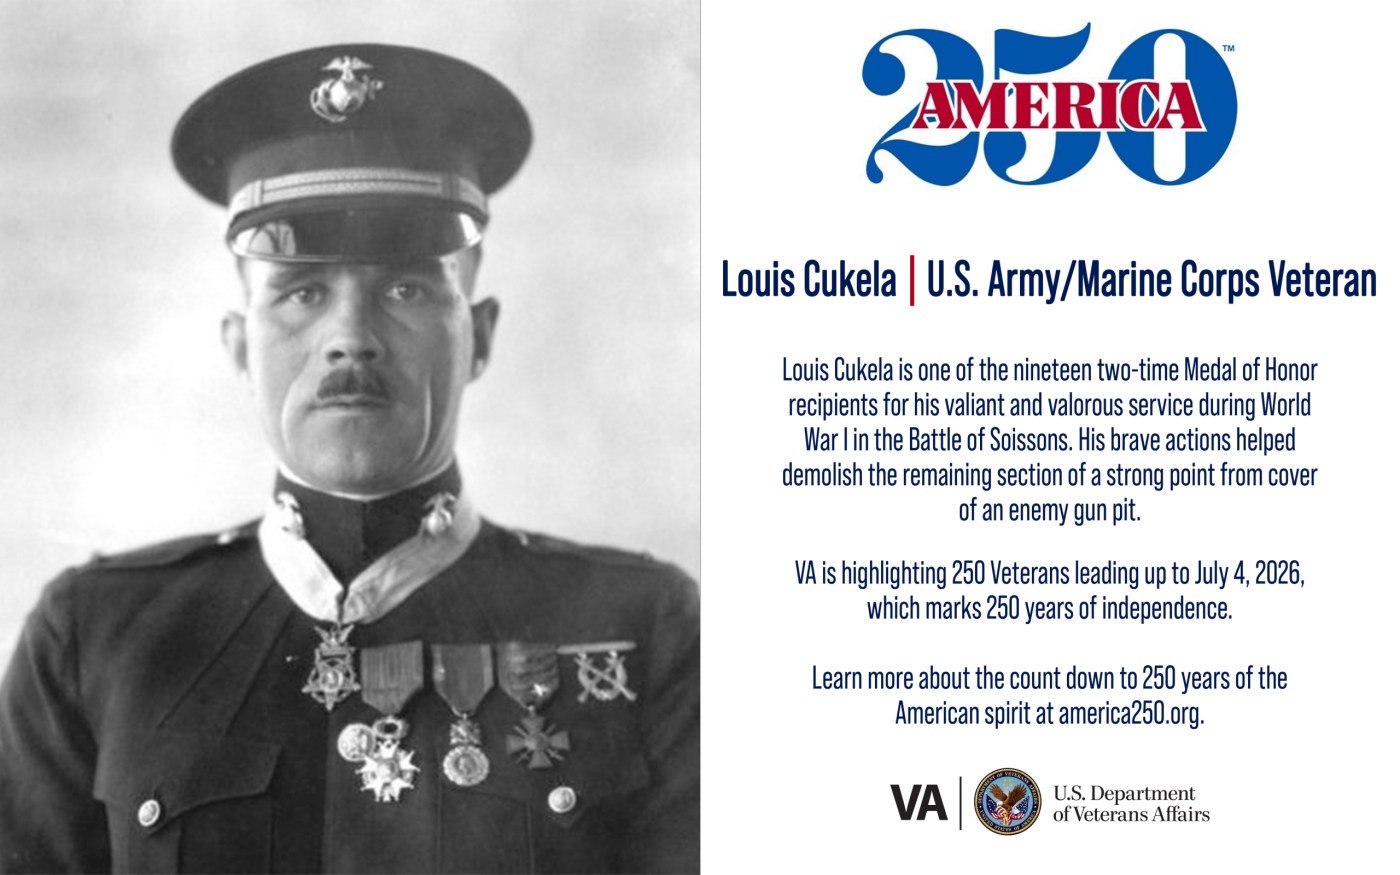 America250: Army and Marine Corps Veteran Louis Cukela